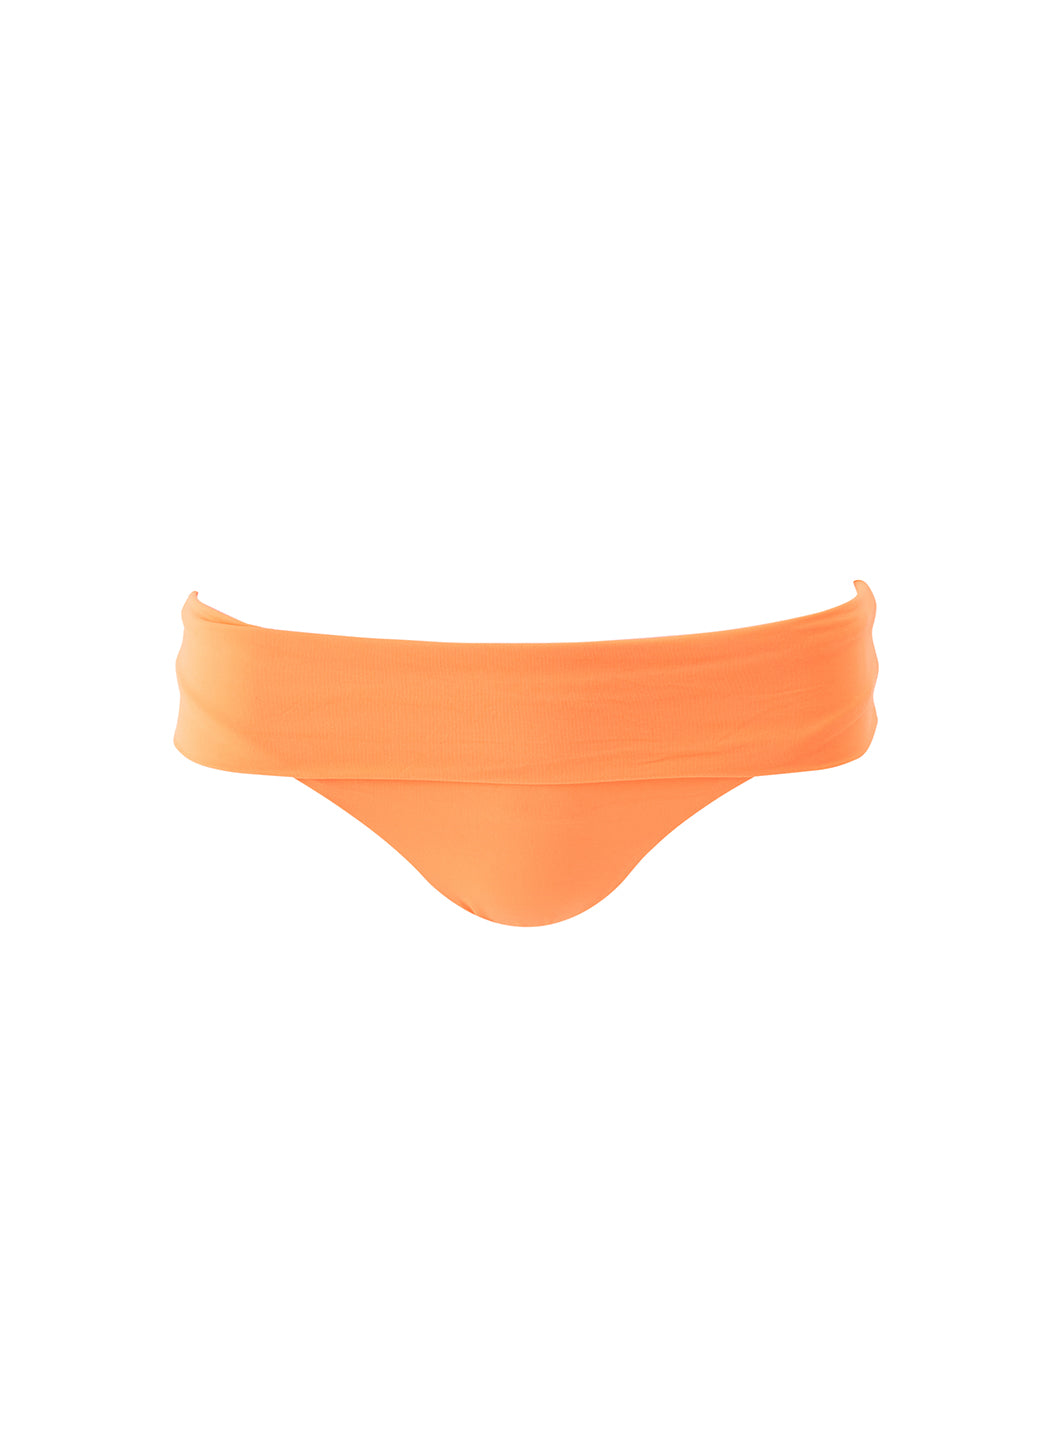 brussels orange bikini bottom cutouts 2024